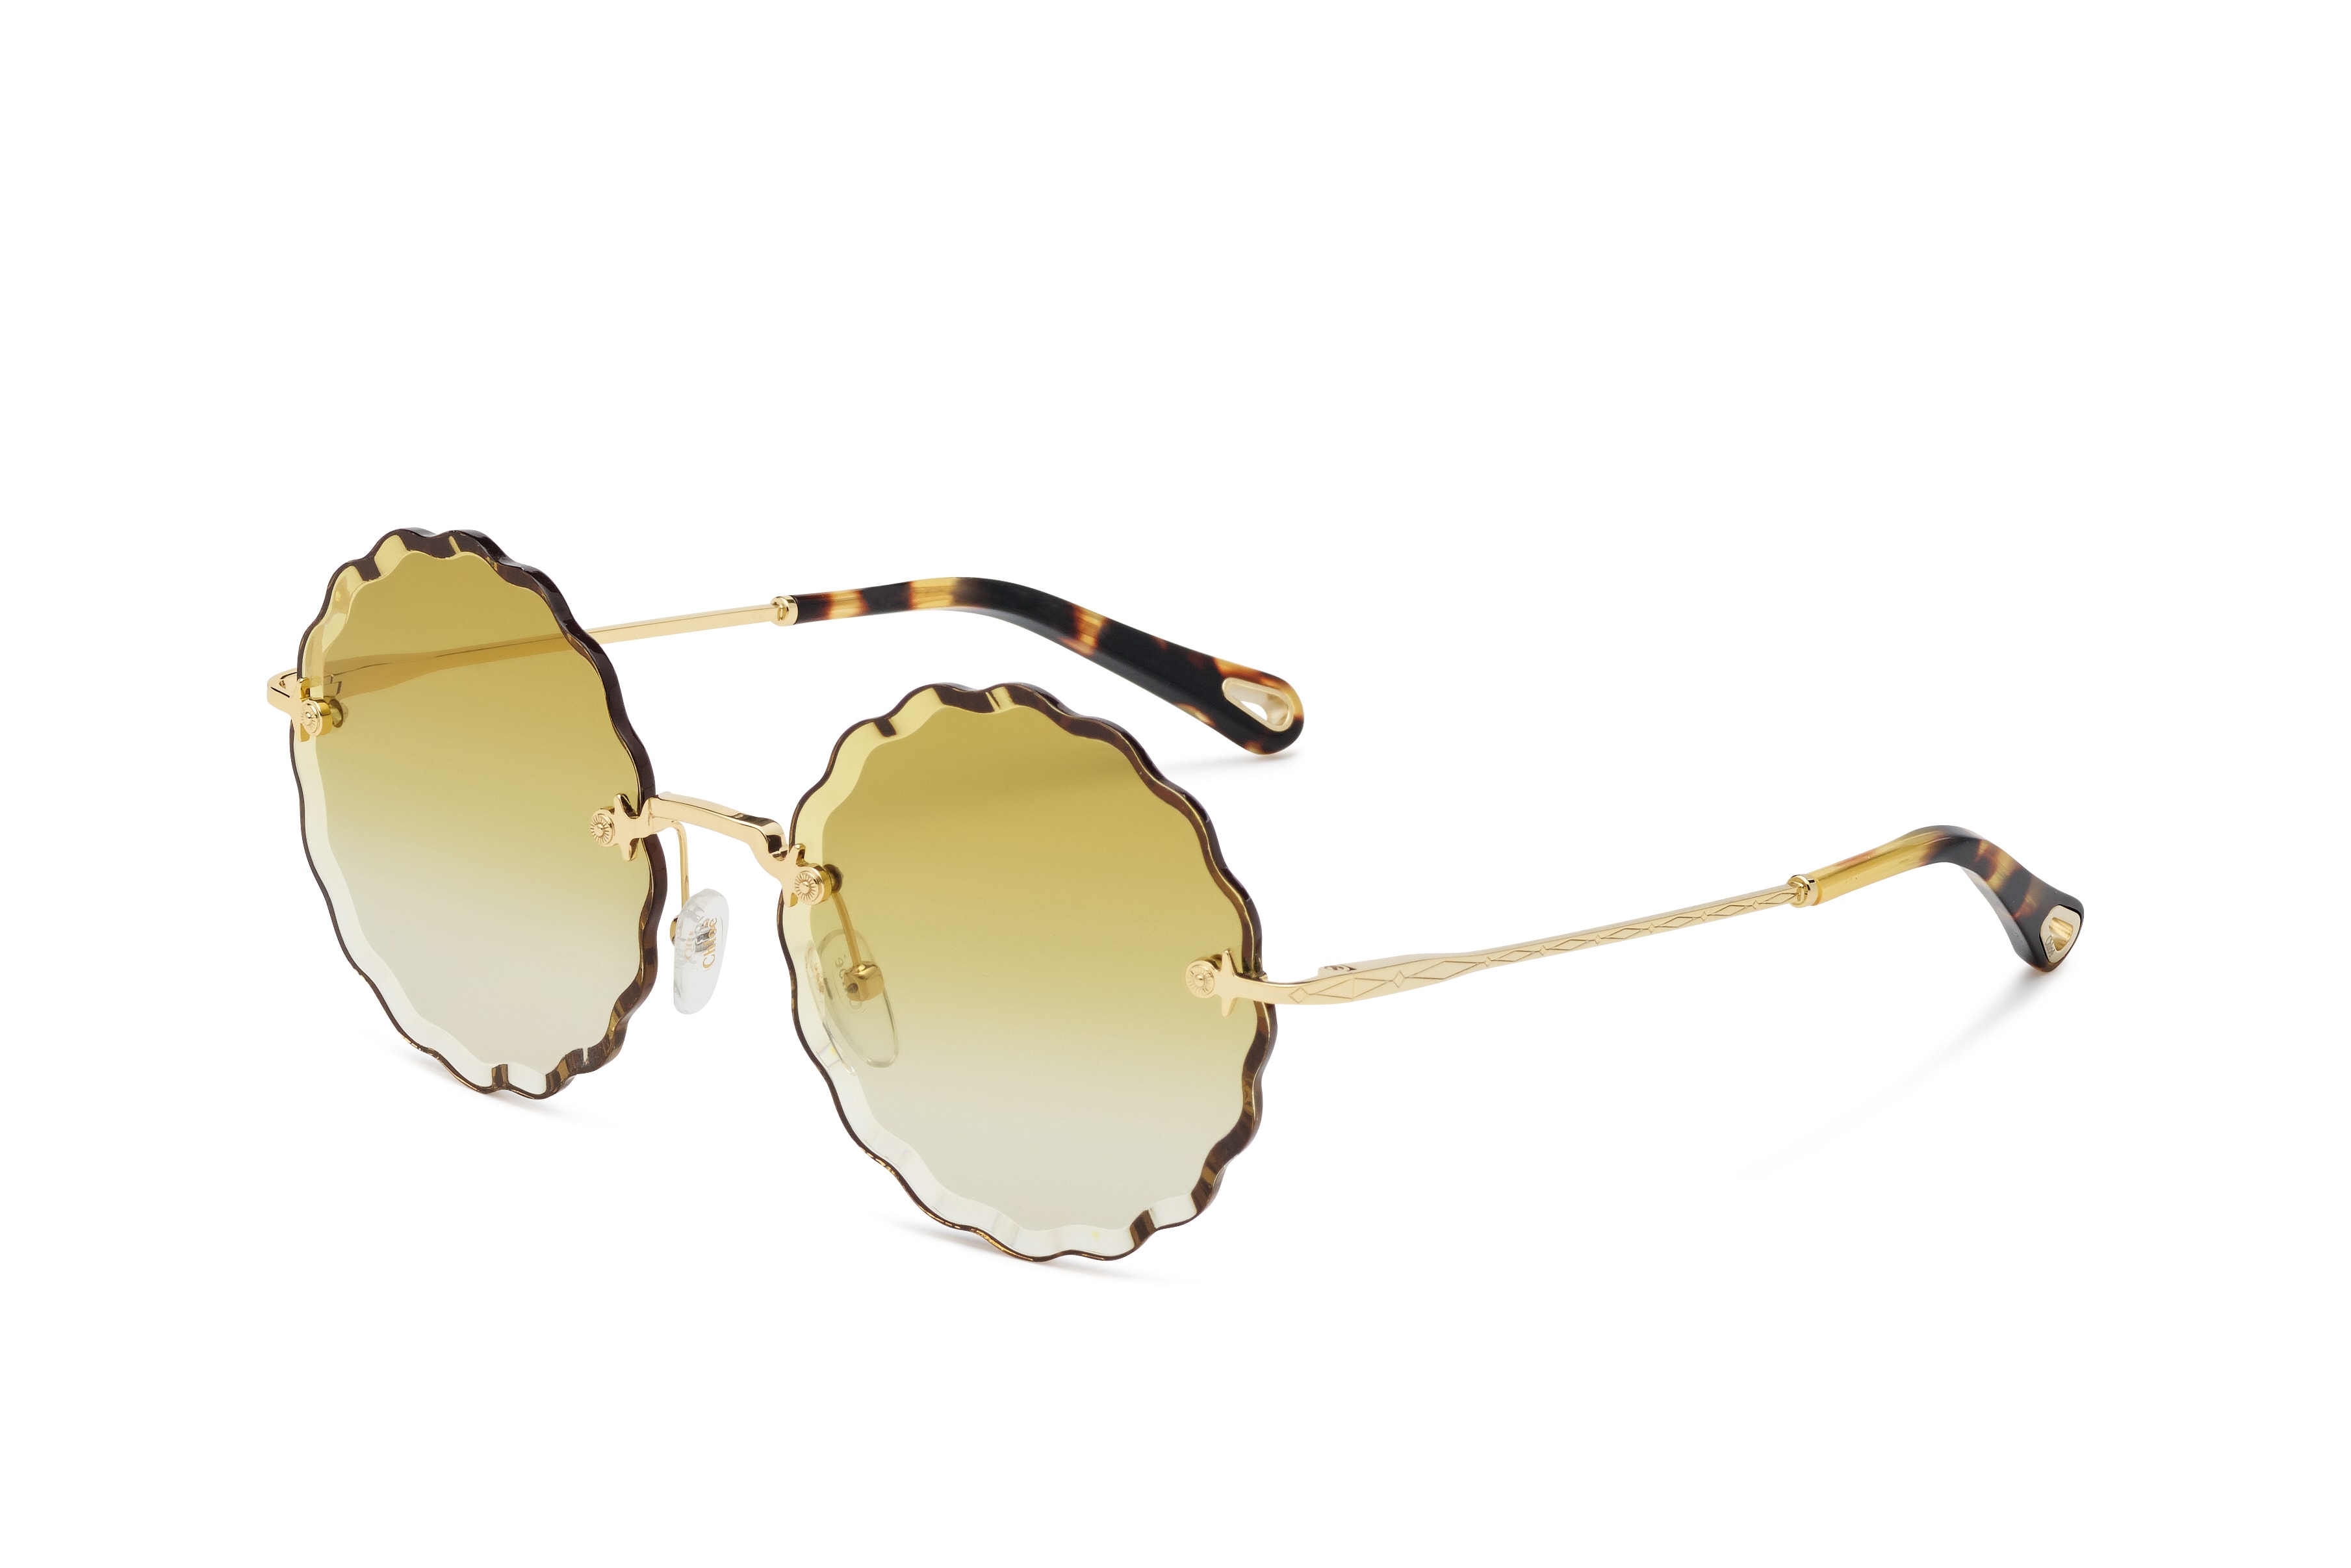 Chloé Rosie Sunglasses Spring/Summer Eyewear Shades Floral Tint Pink Blue Yellow Brown